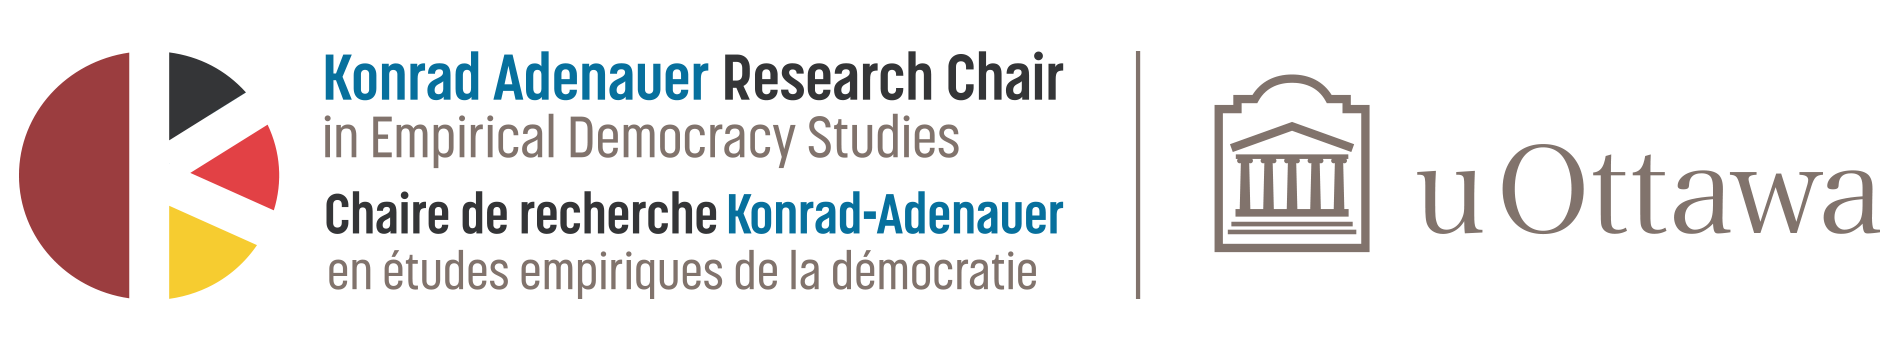 Konrad Adenauer Research Chair in Empirical Democracy Studies